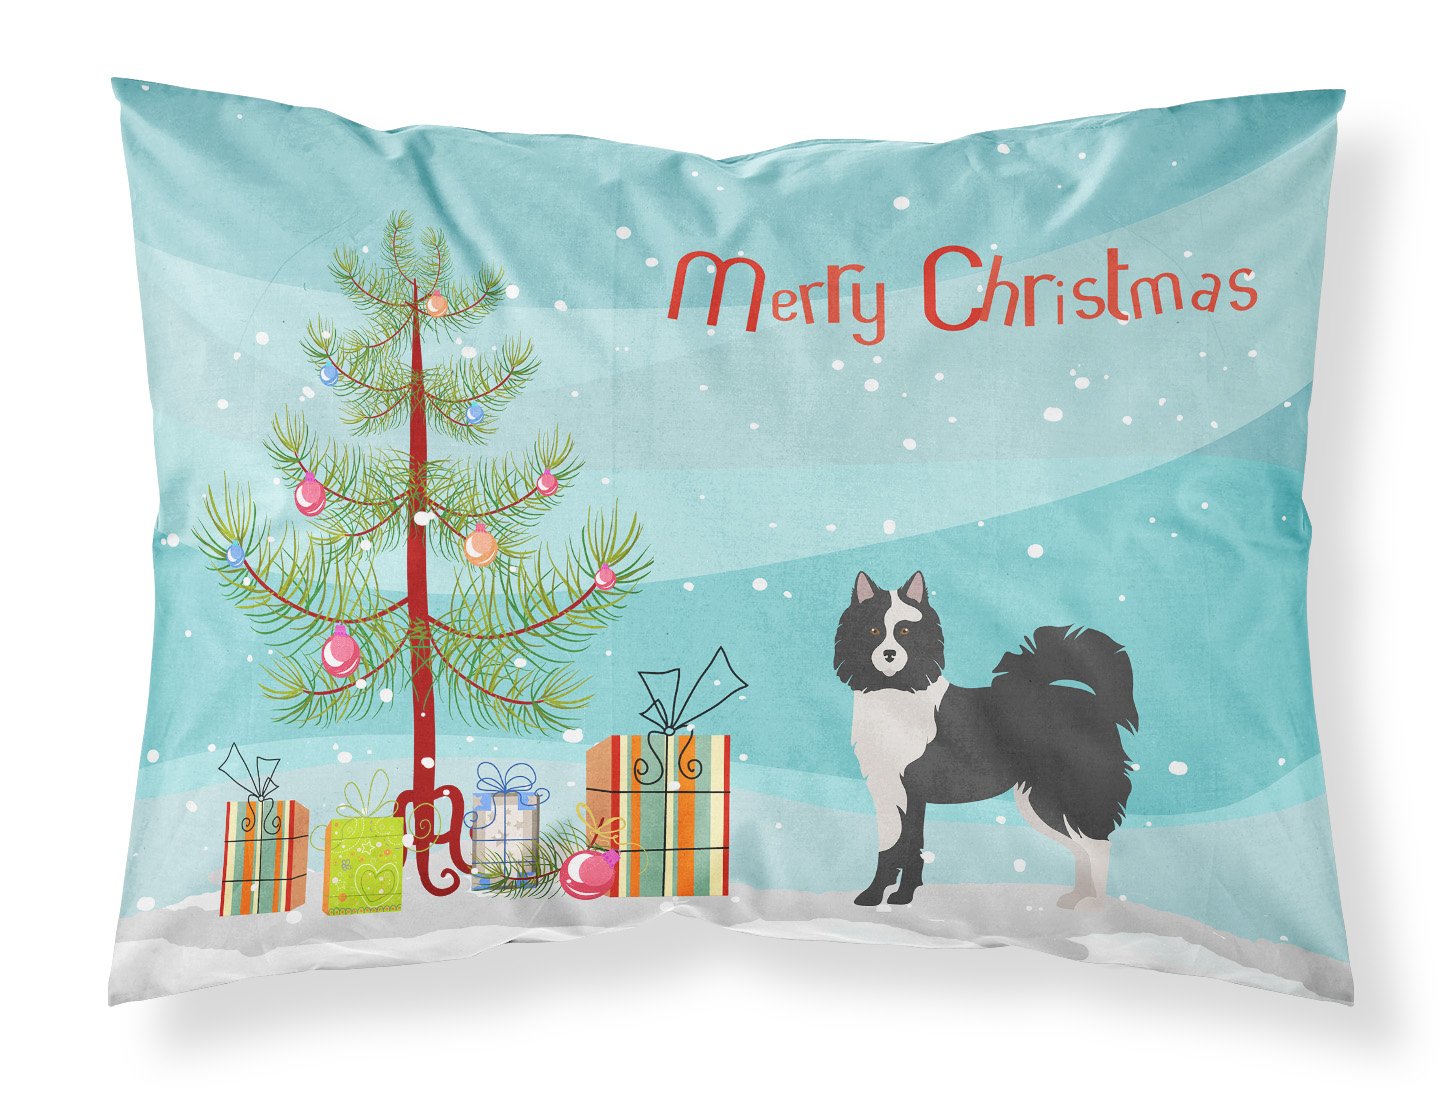 Black and White Elo dog Christmas Tree Fabric Standard Pillowcase CK3452PILLOWCASE by Caroline's Treasures